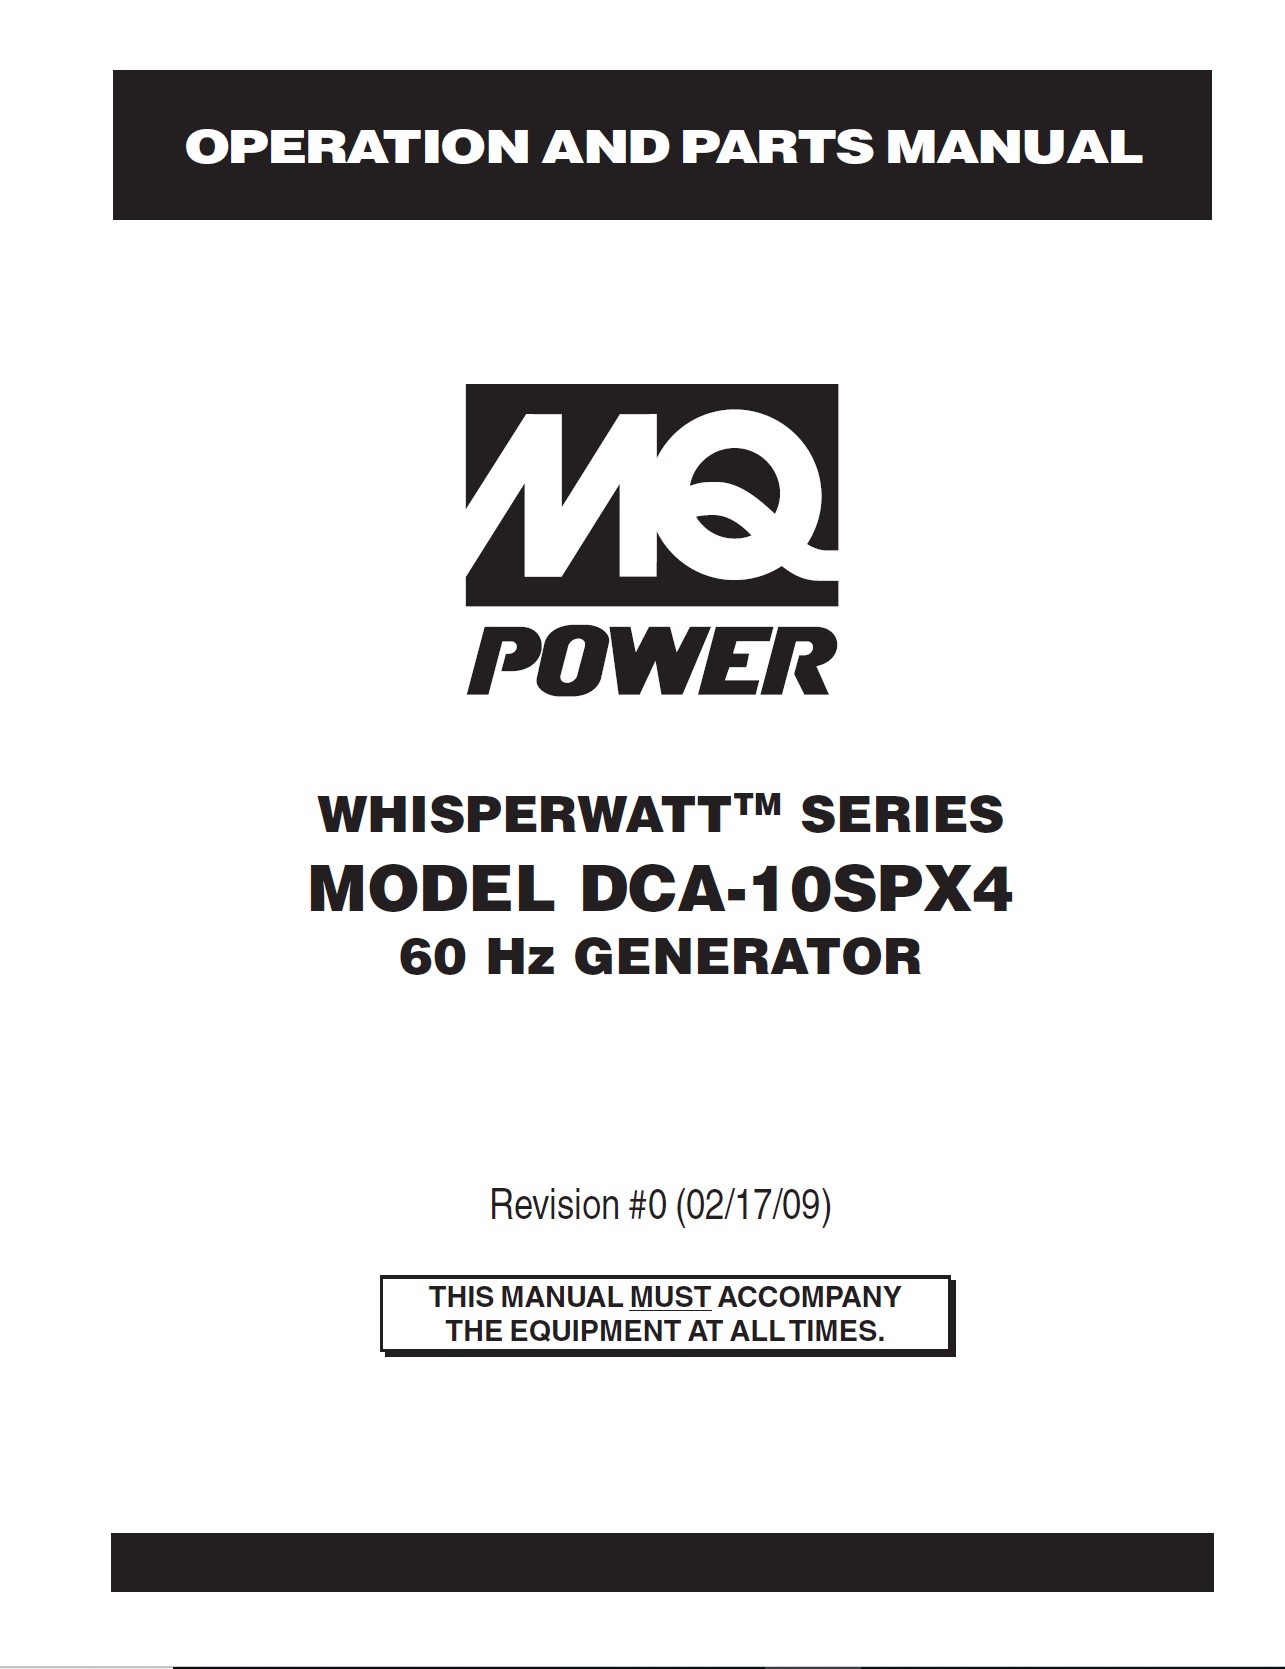 Generators-portable-whisperwatt-DCA10SPX4-rev-0-manual